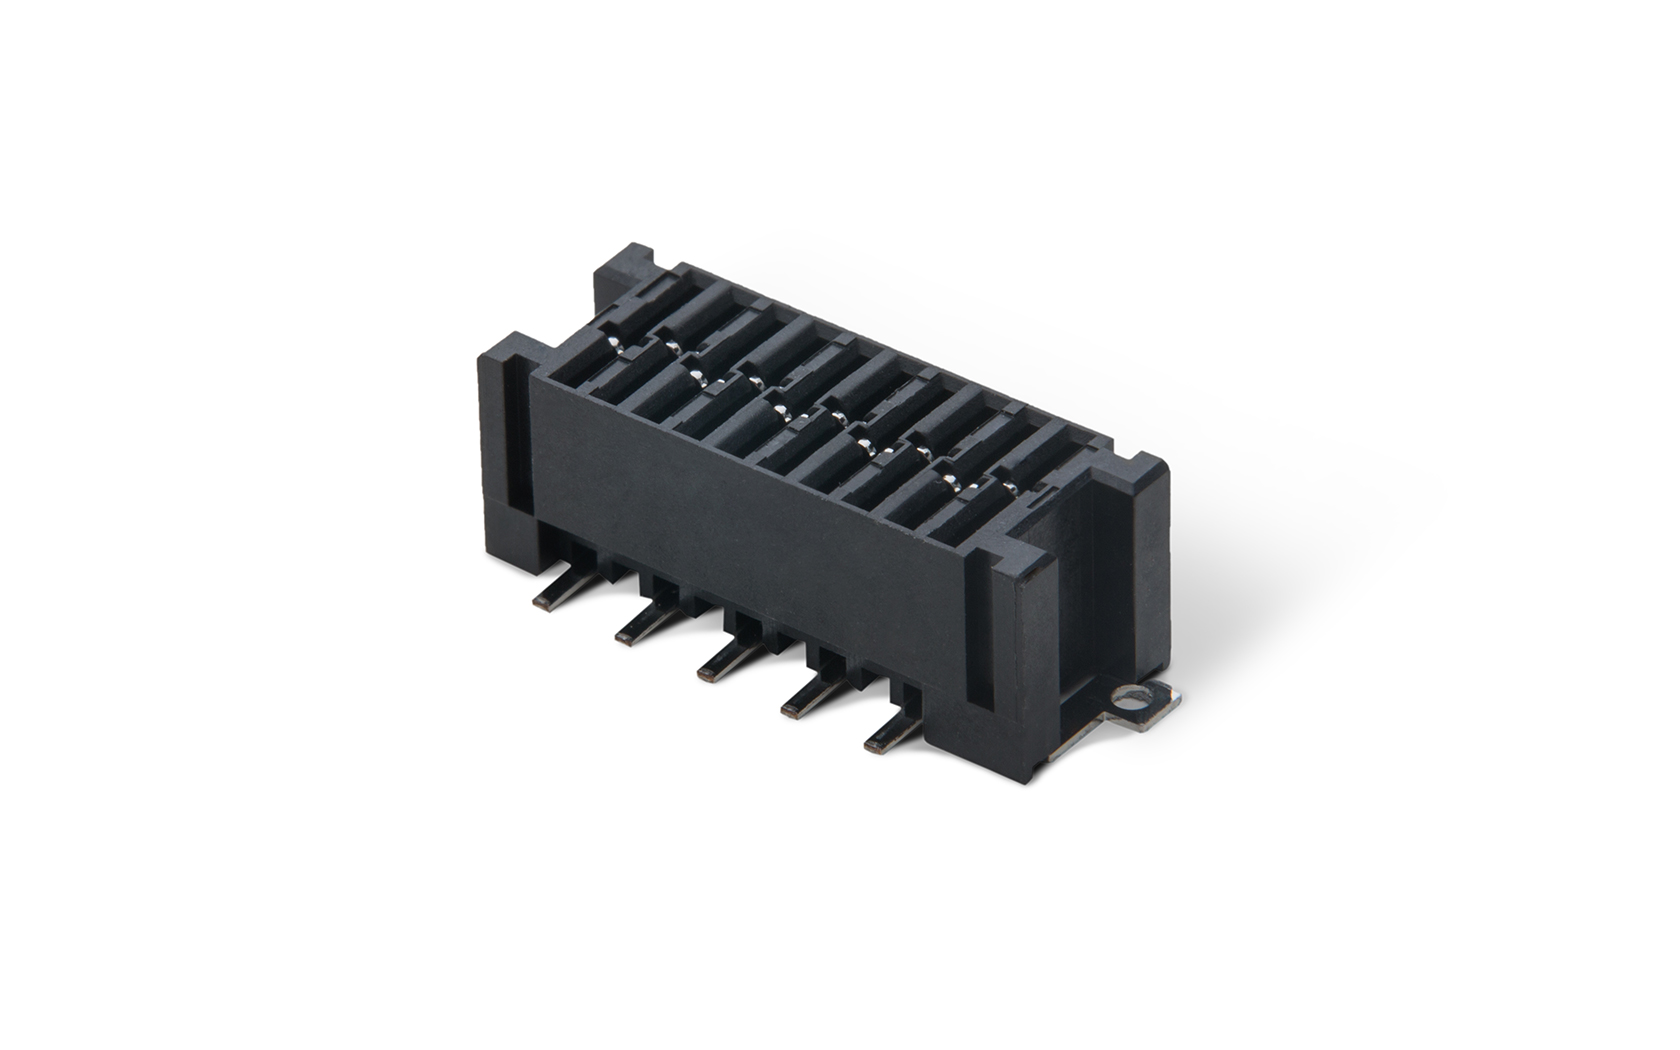 Iriso Electronics - Produkt BtoB Connector 9890s Series